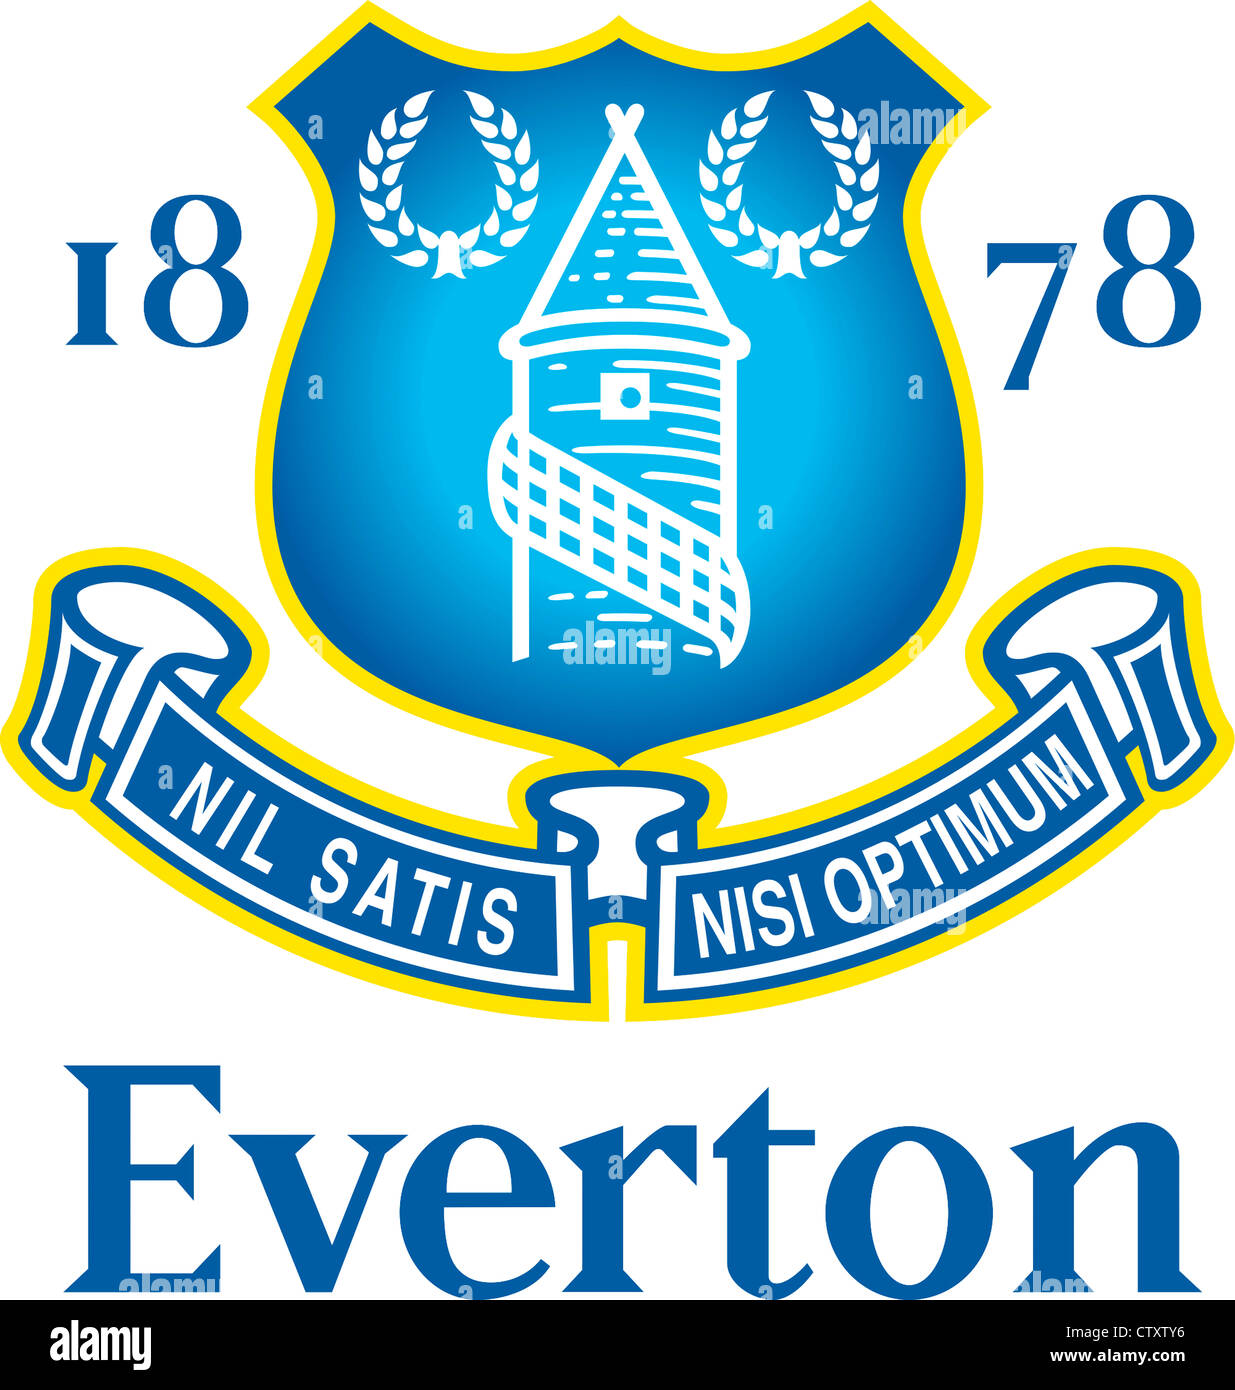 Logo of English football team Everton Football Club. Stock Photo